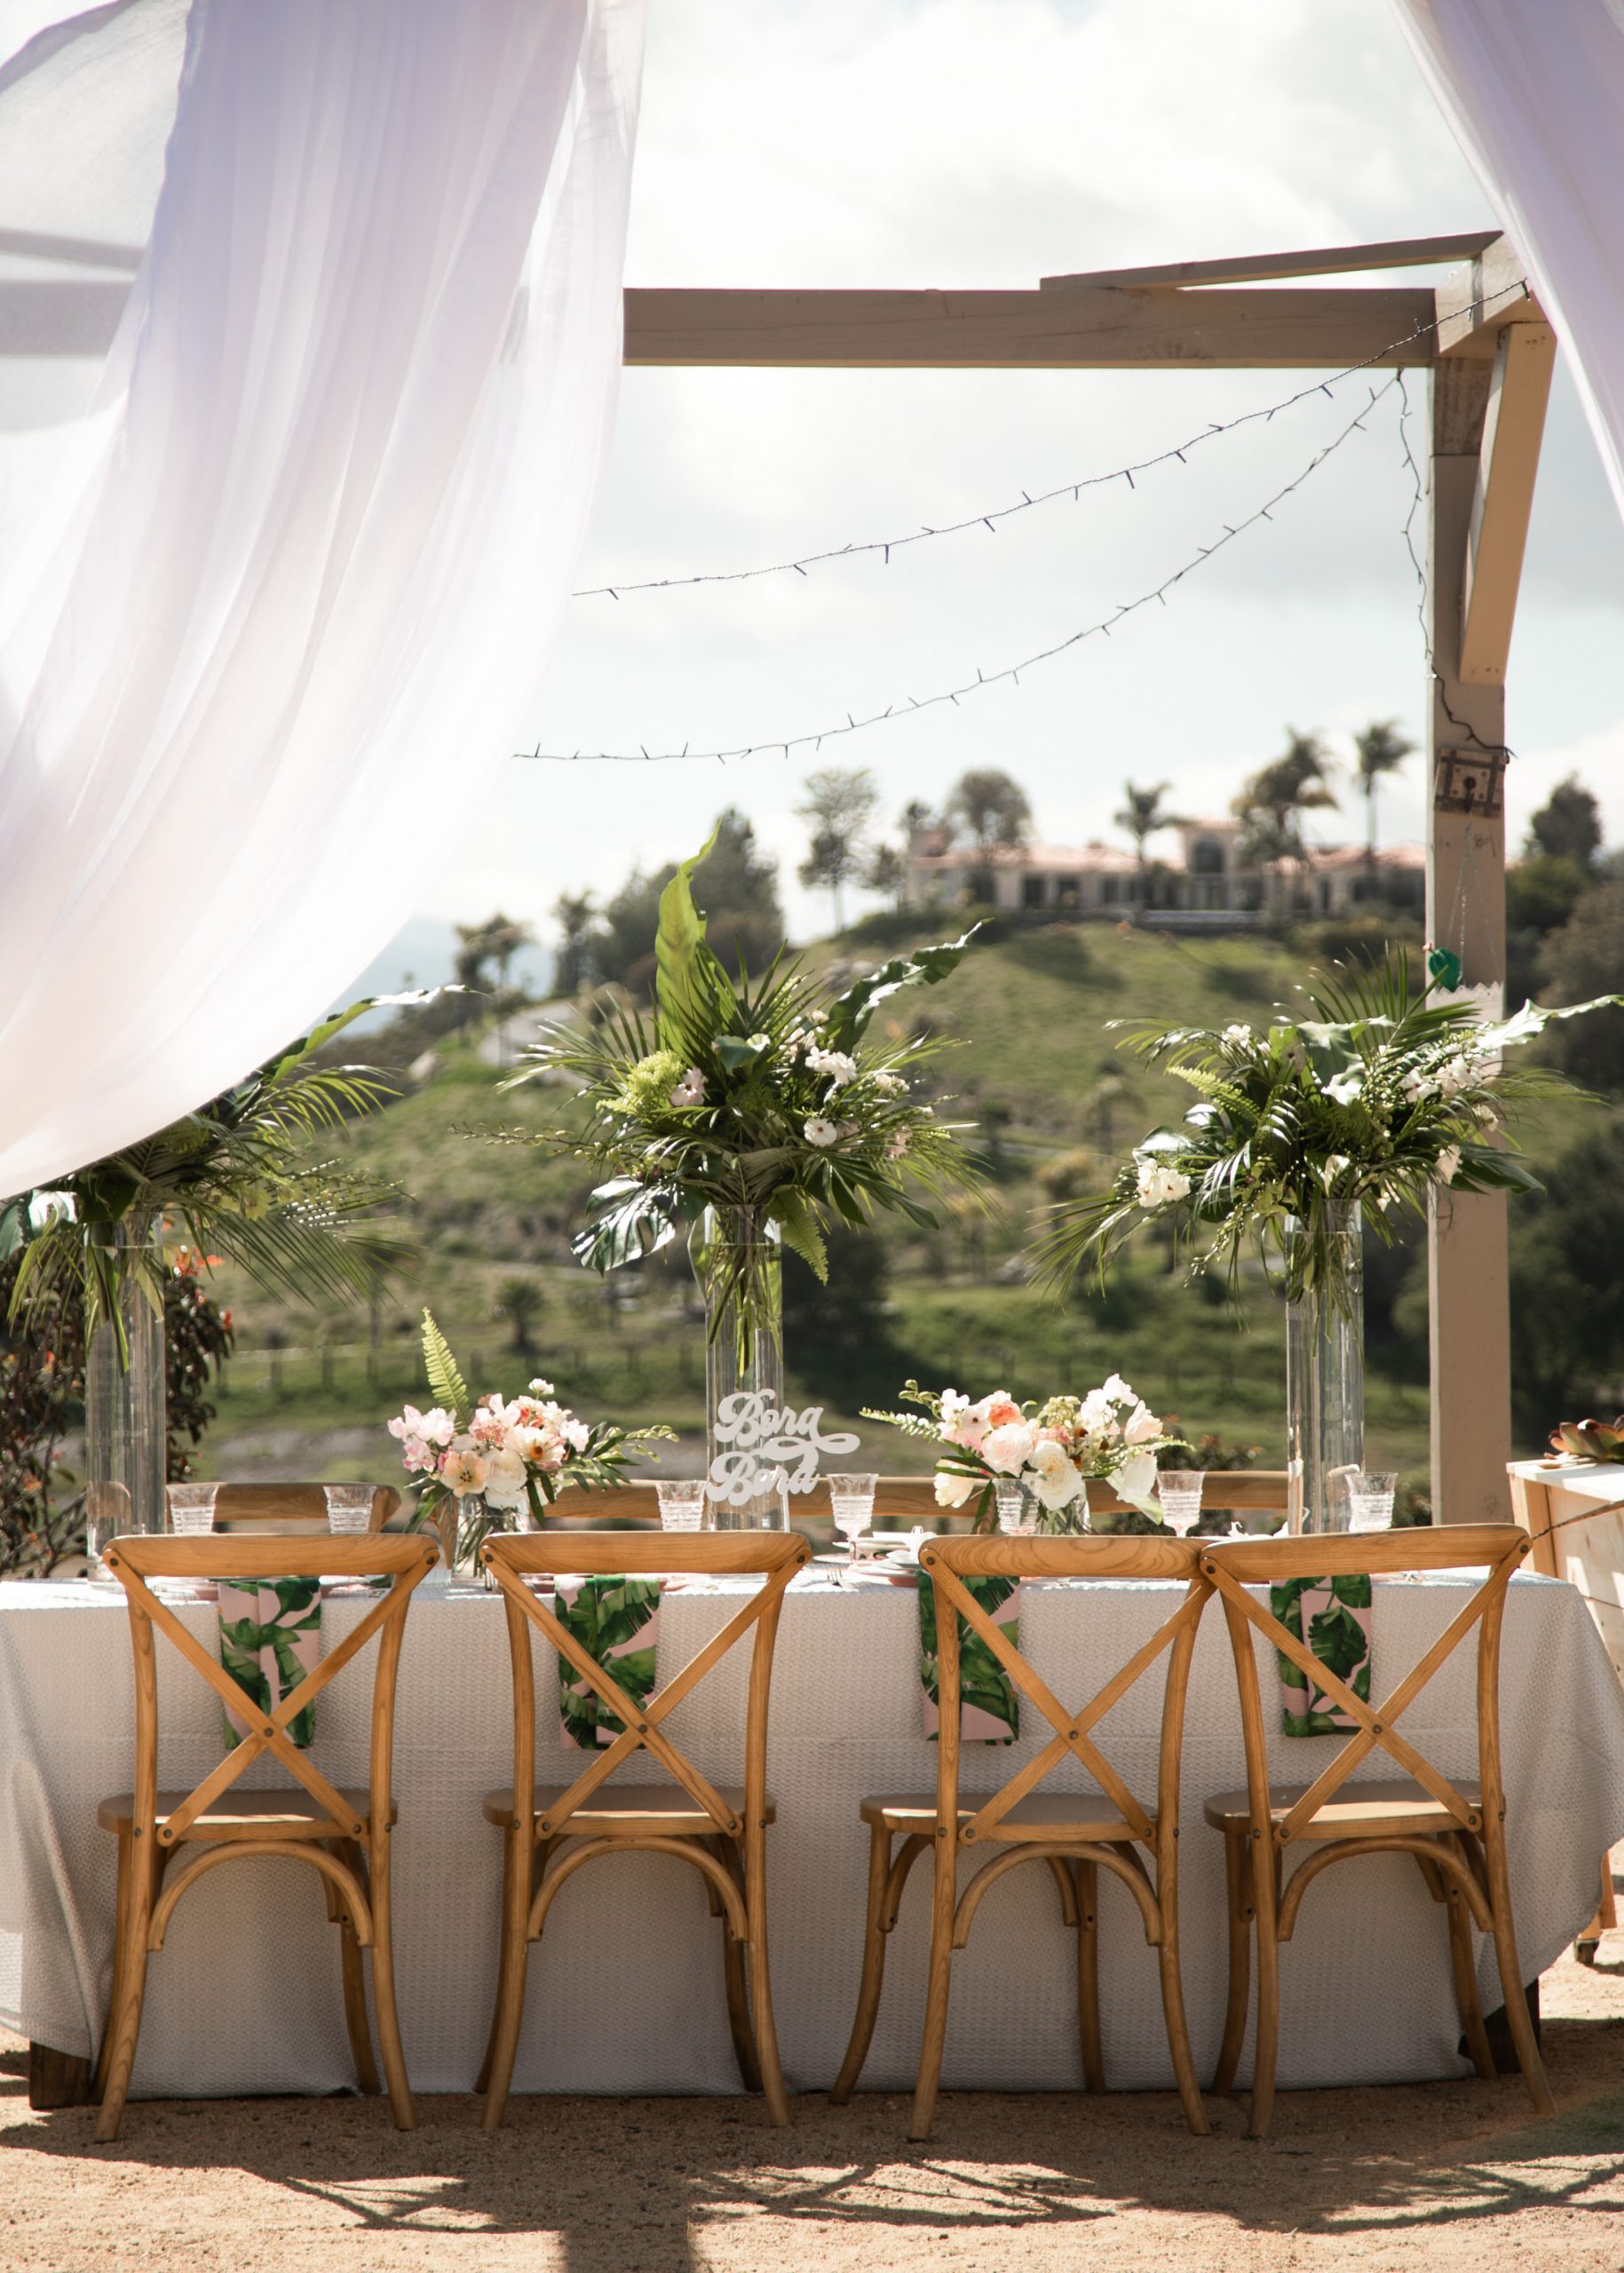 Tropical wedding ideas for reception.